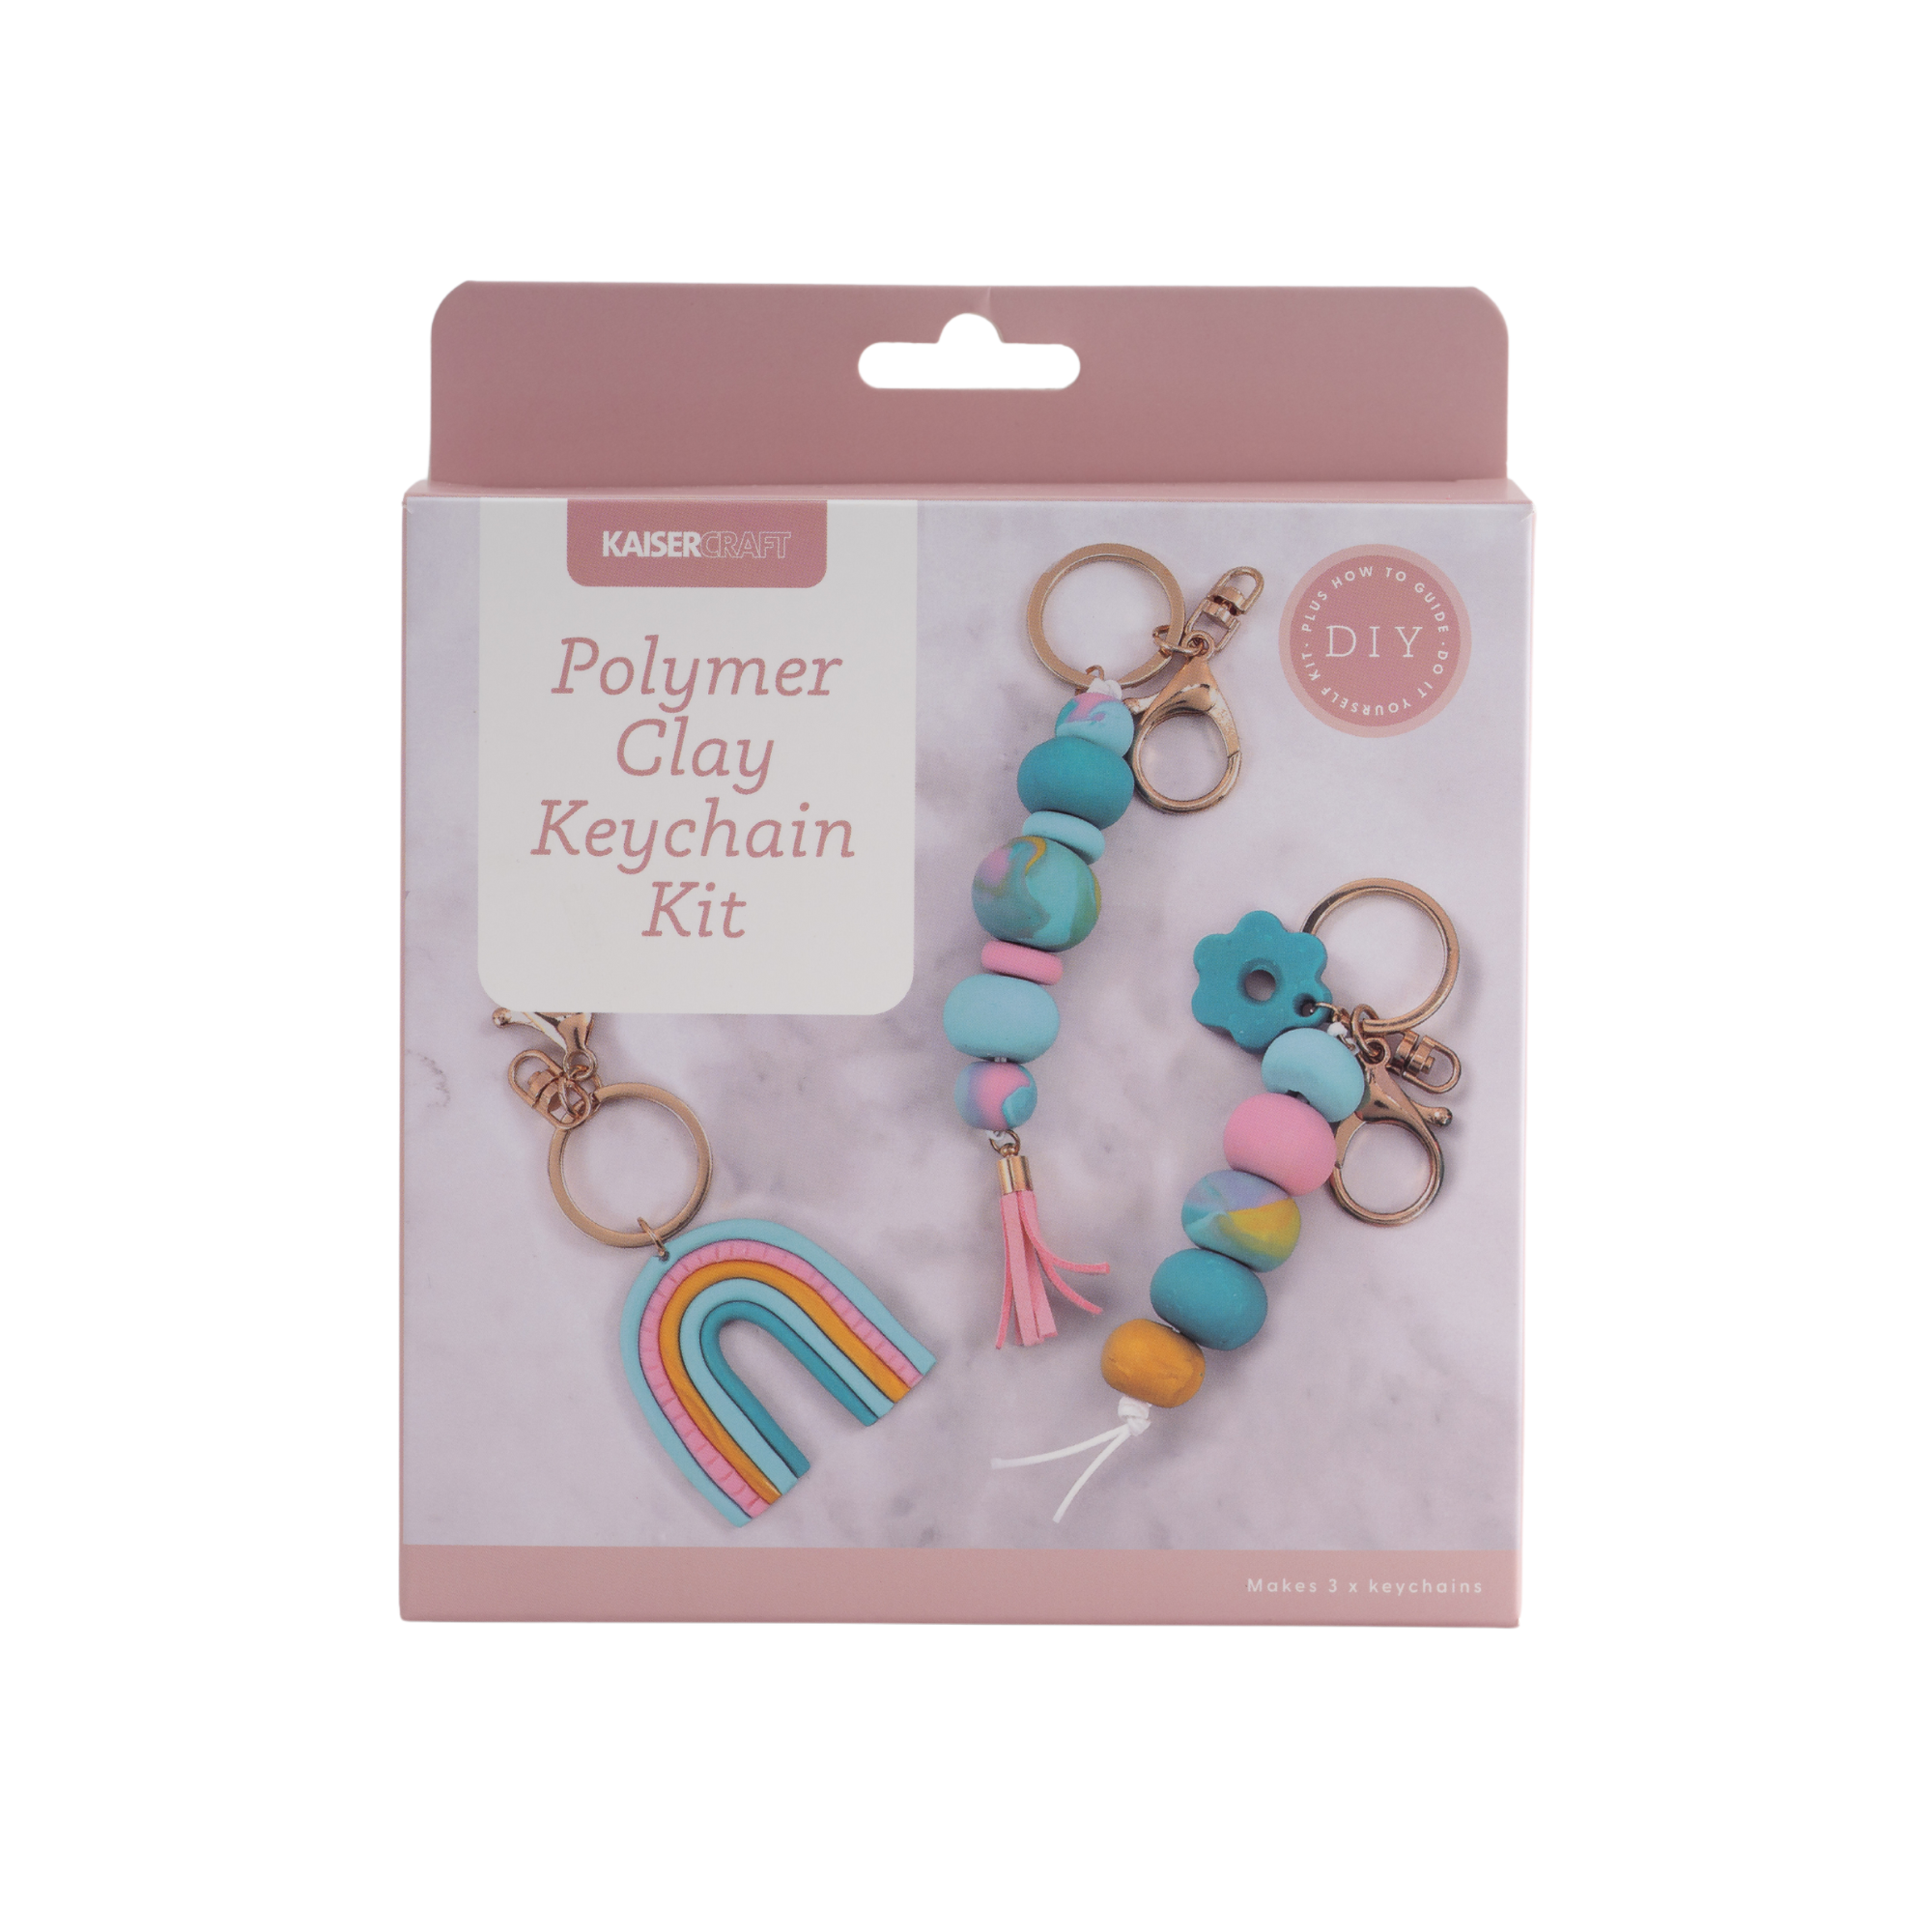 Polymer Clay Kit - Keychains